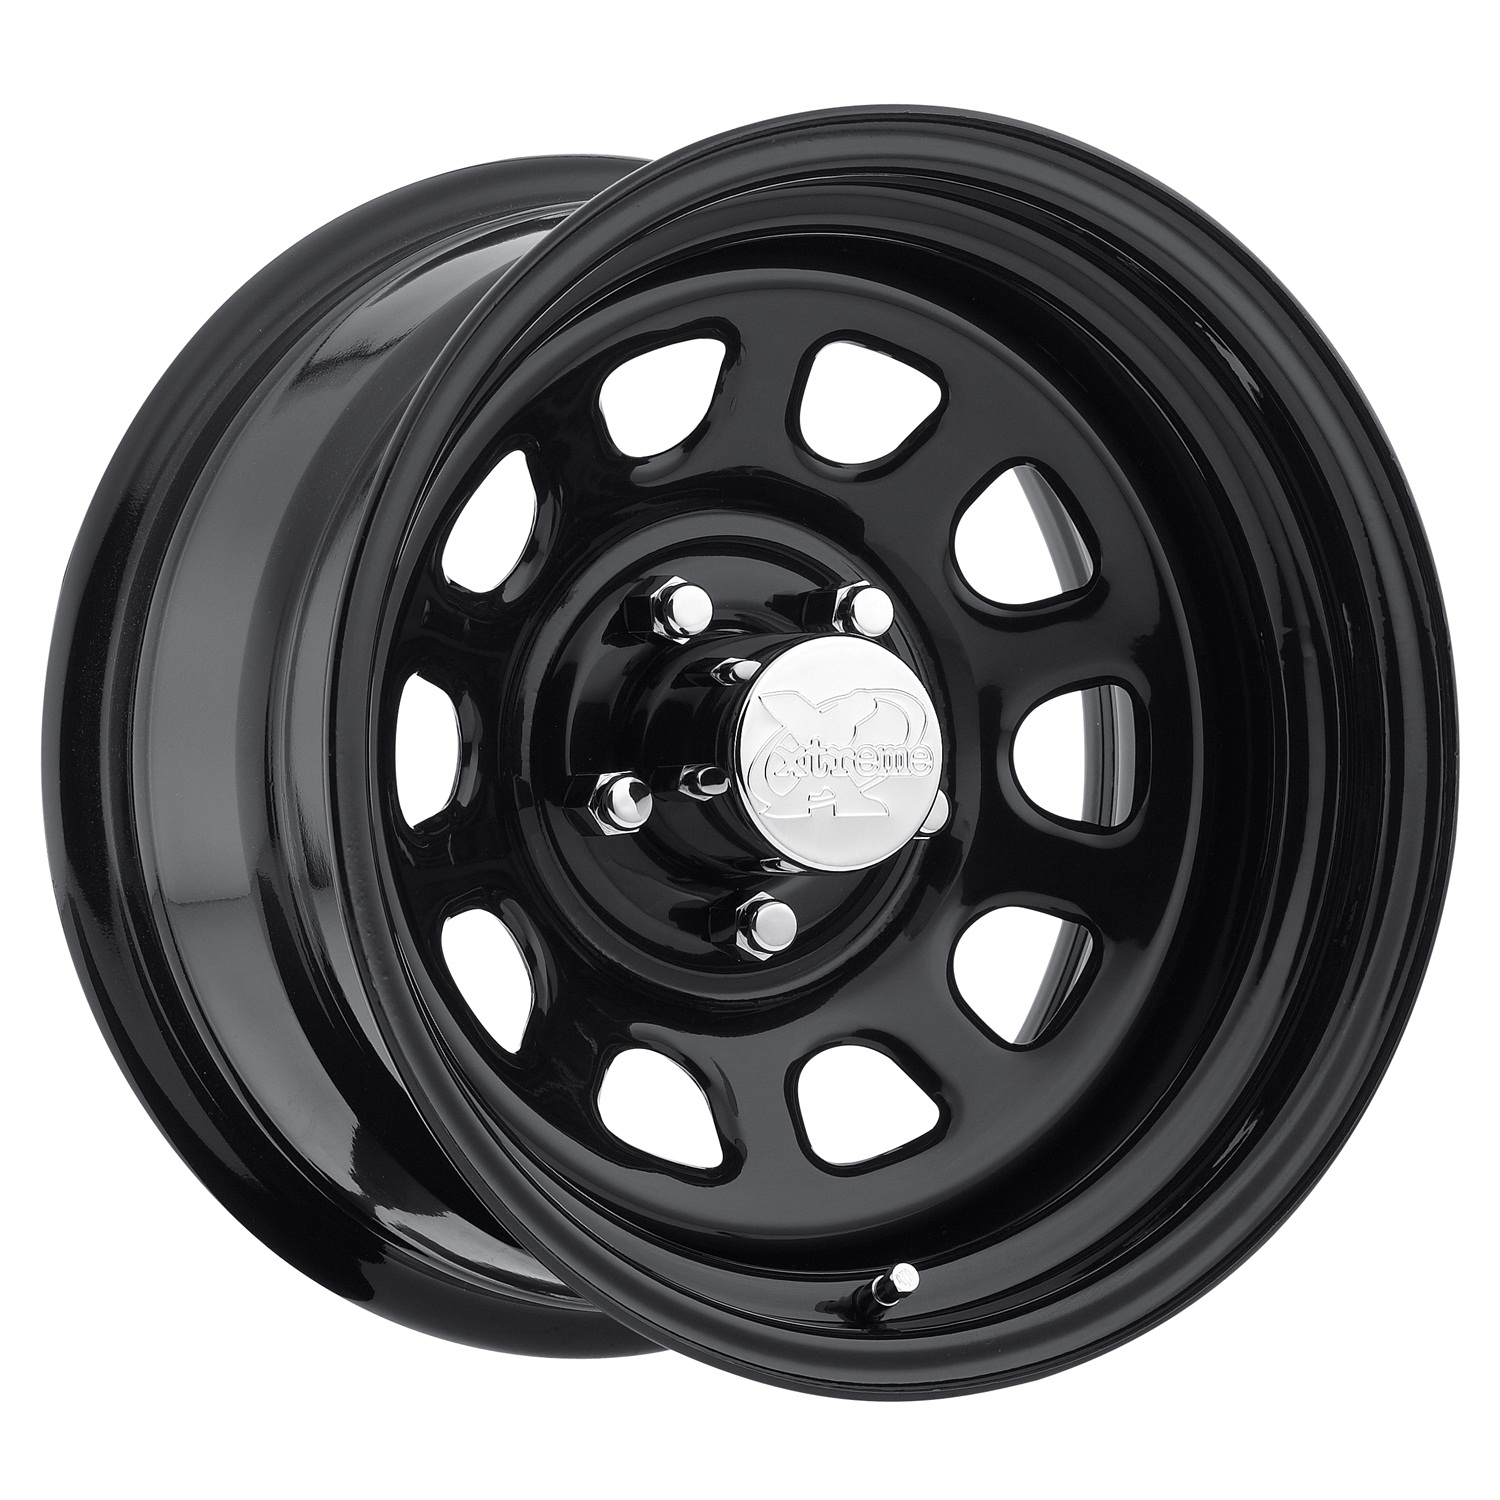 Pro Comp Wheels Pro Comp Wheels 51-5165F Rock Crawler Series 51 Black Wheel